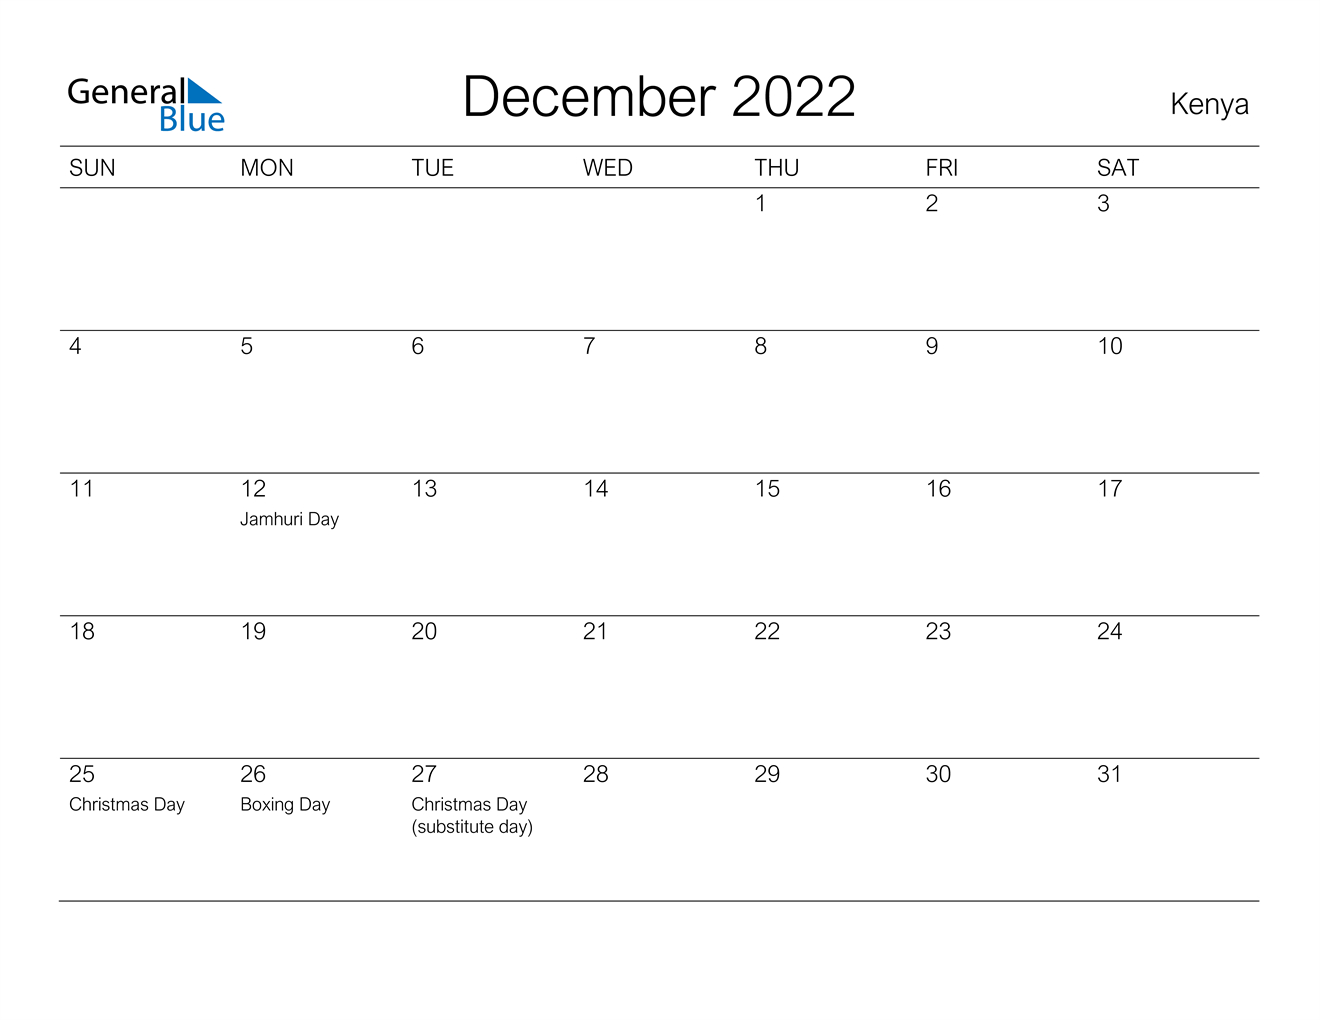 December 2022 Calendar - Kenya